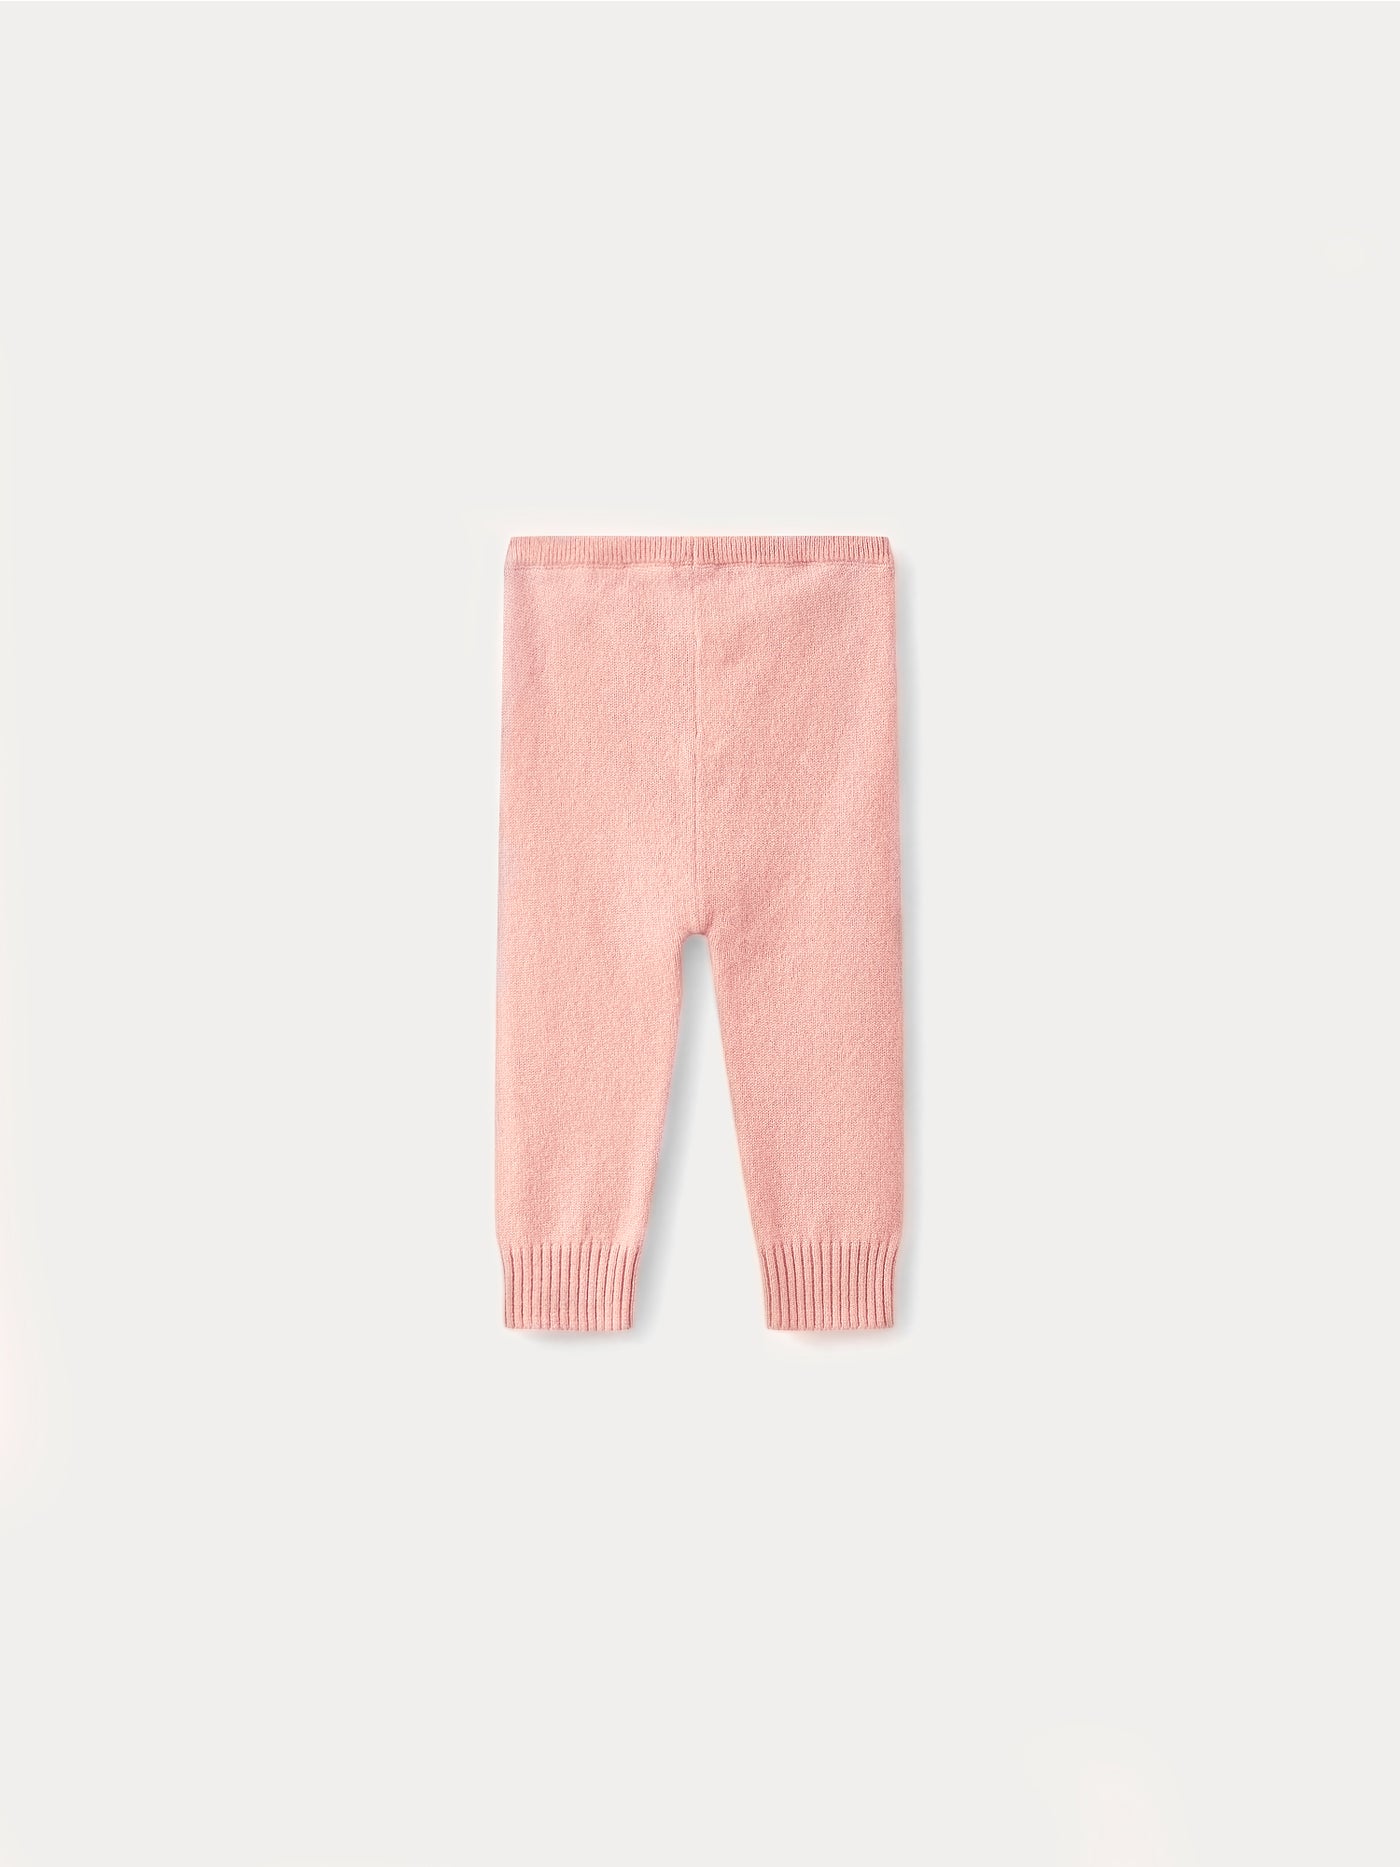 Babies' leggings faded pink